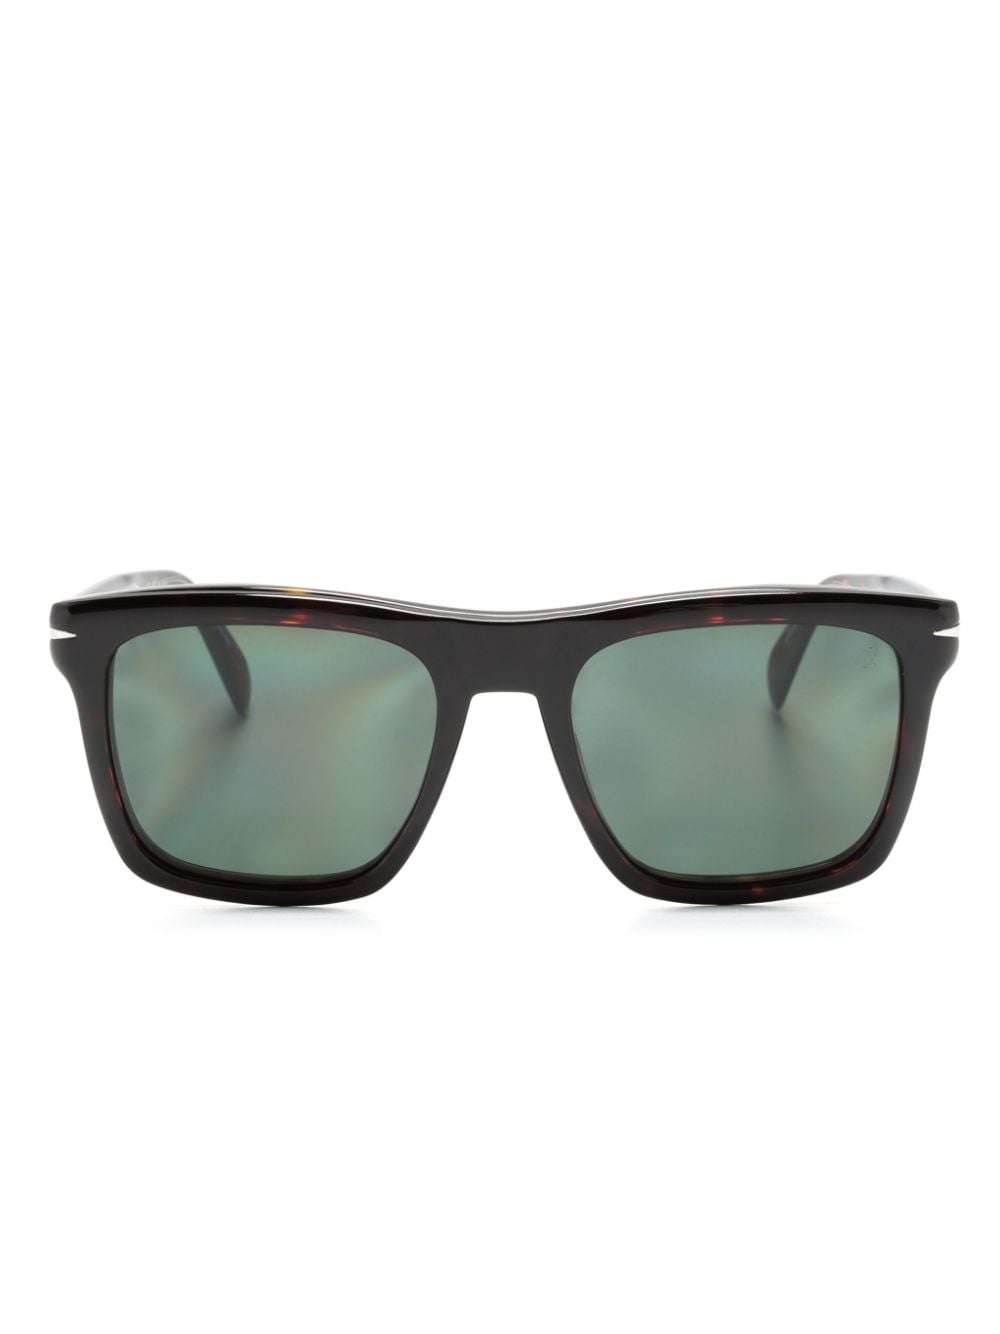 Eyewear by David Beckham tortoiseshell square-frame sunglasses - Brown von Eyewear by David Beckham